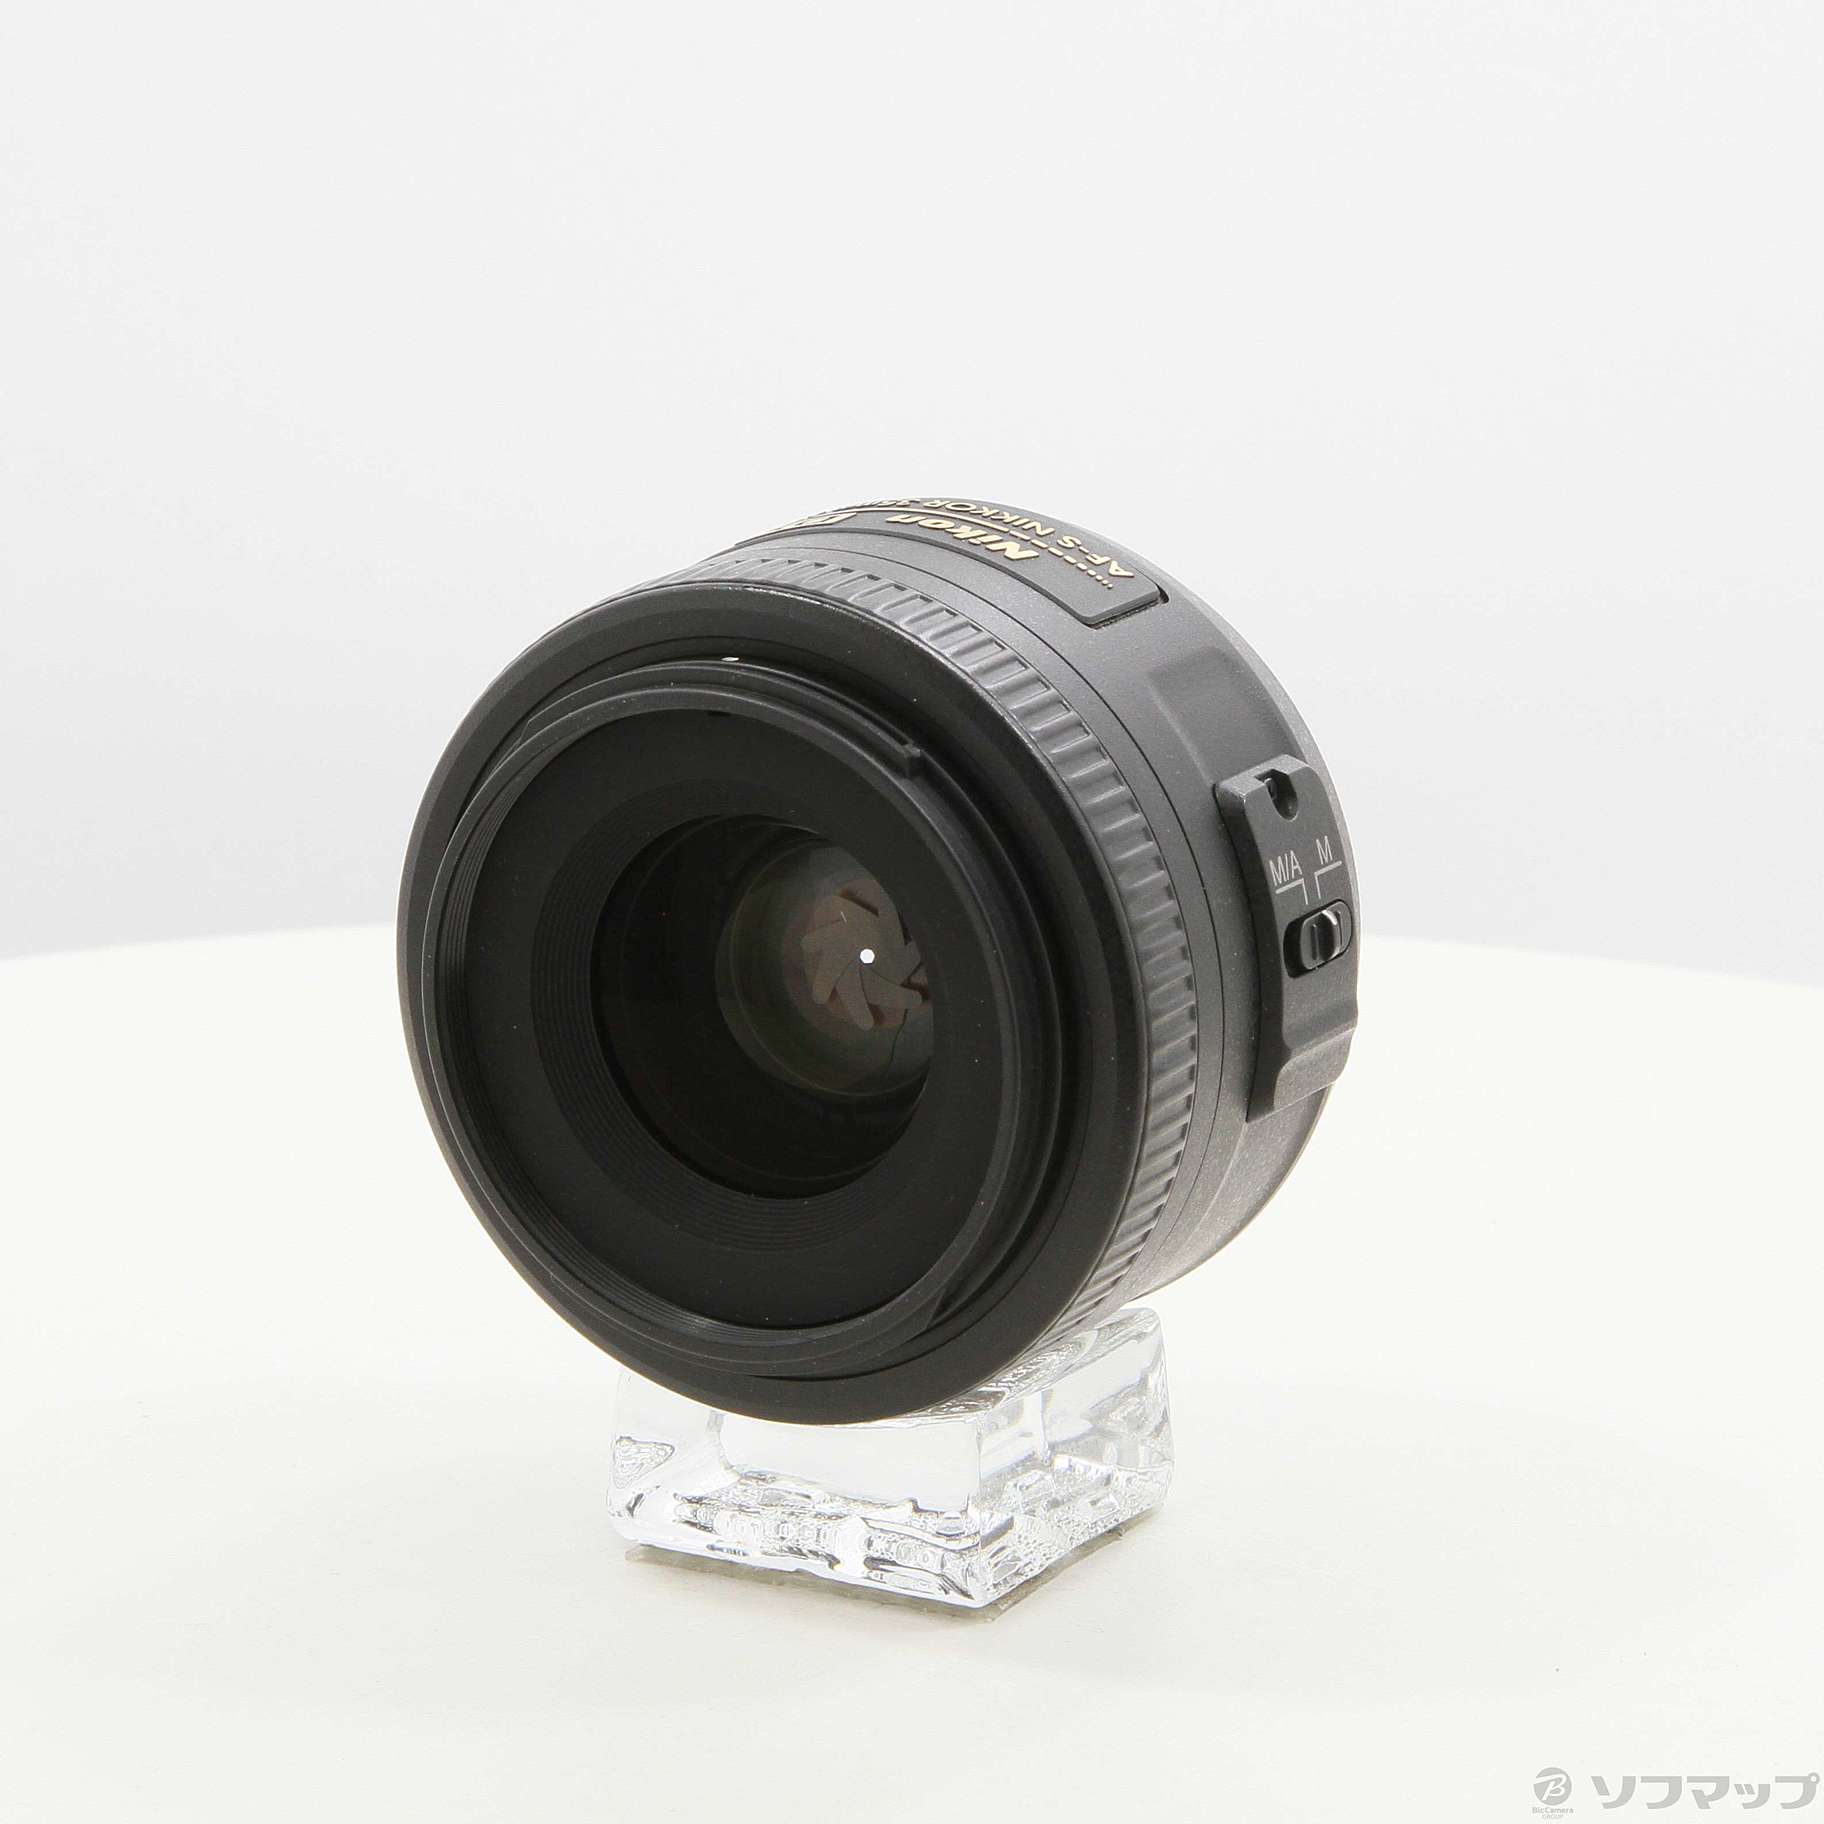 Nikon DX35mm f1.8